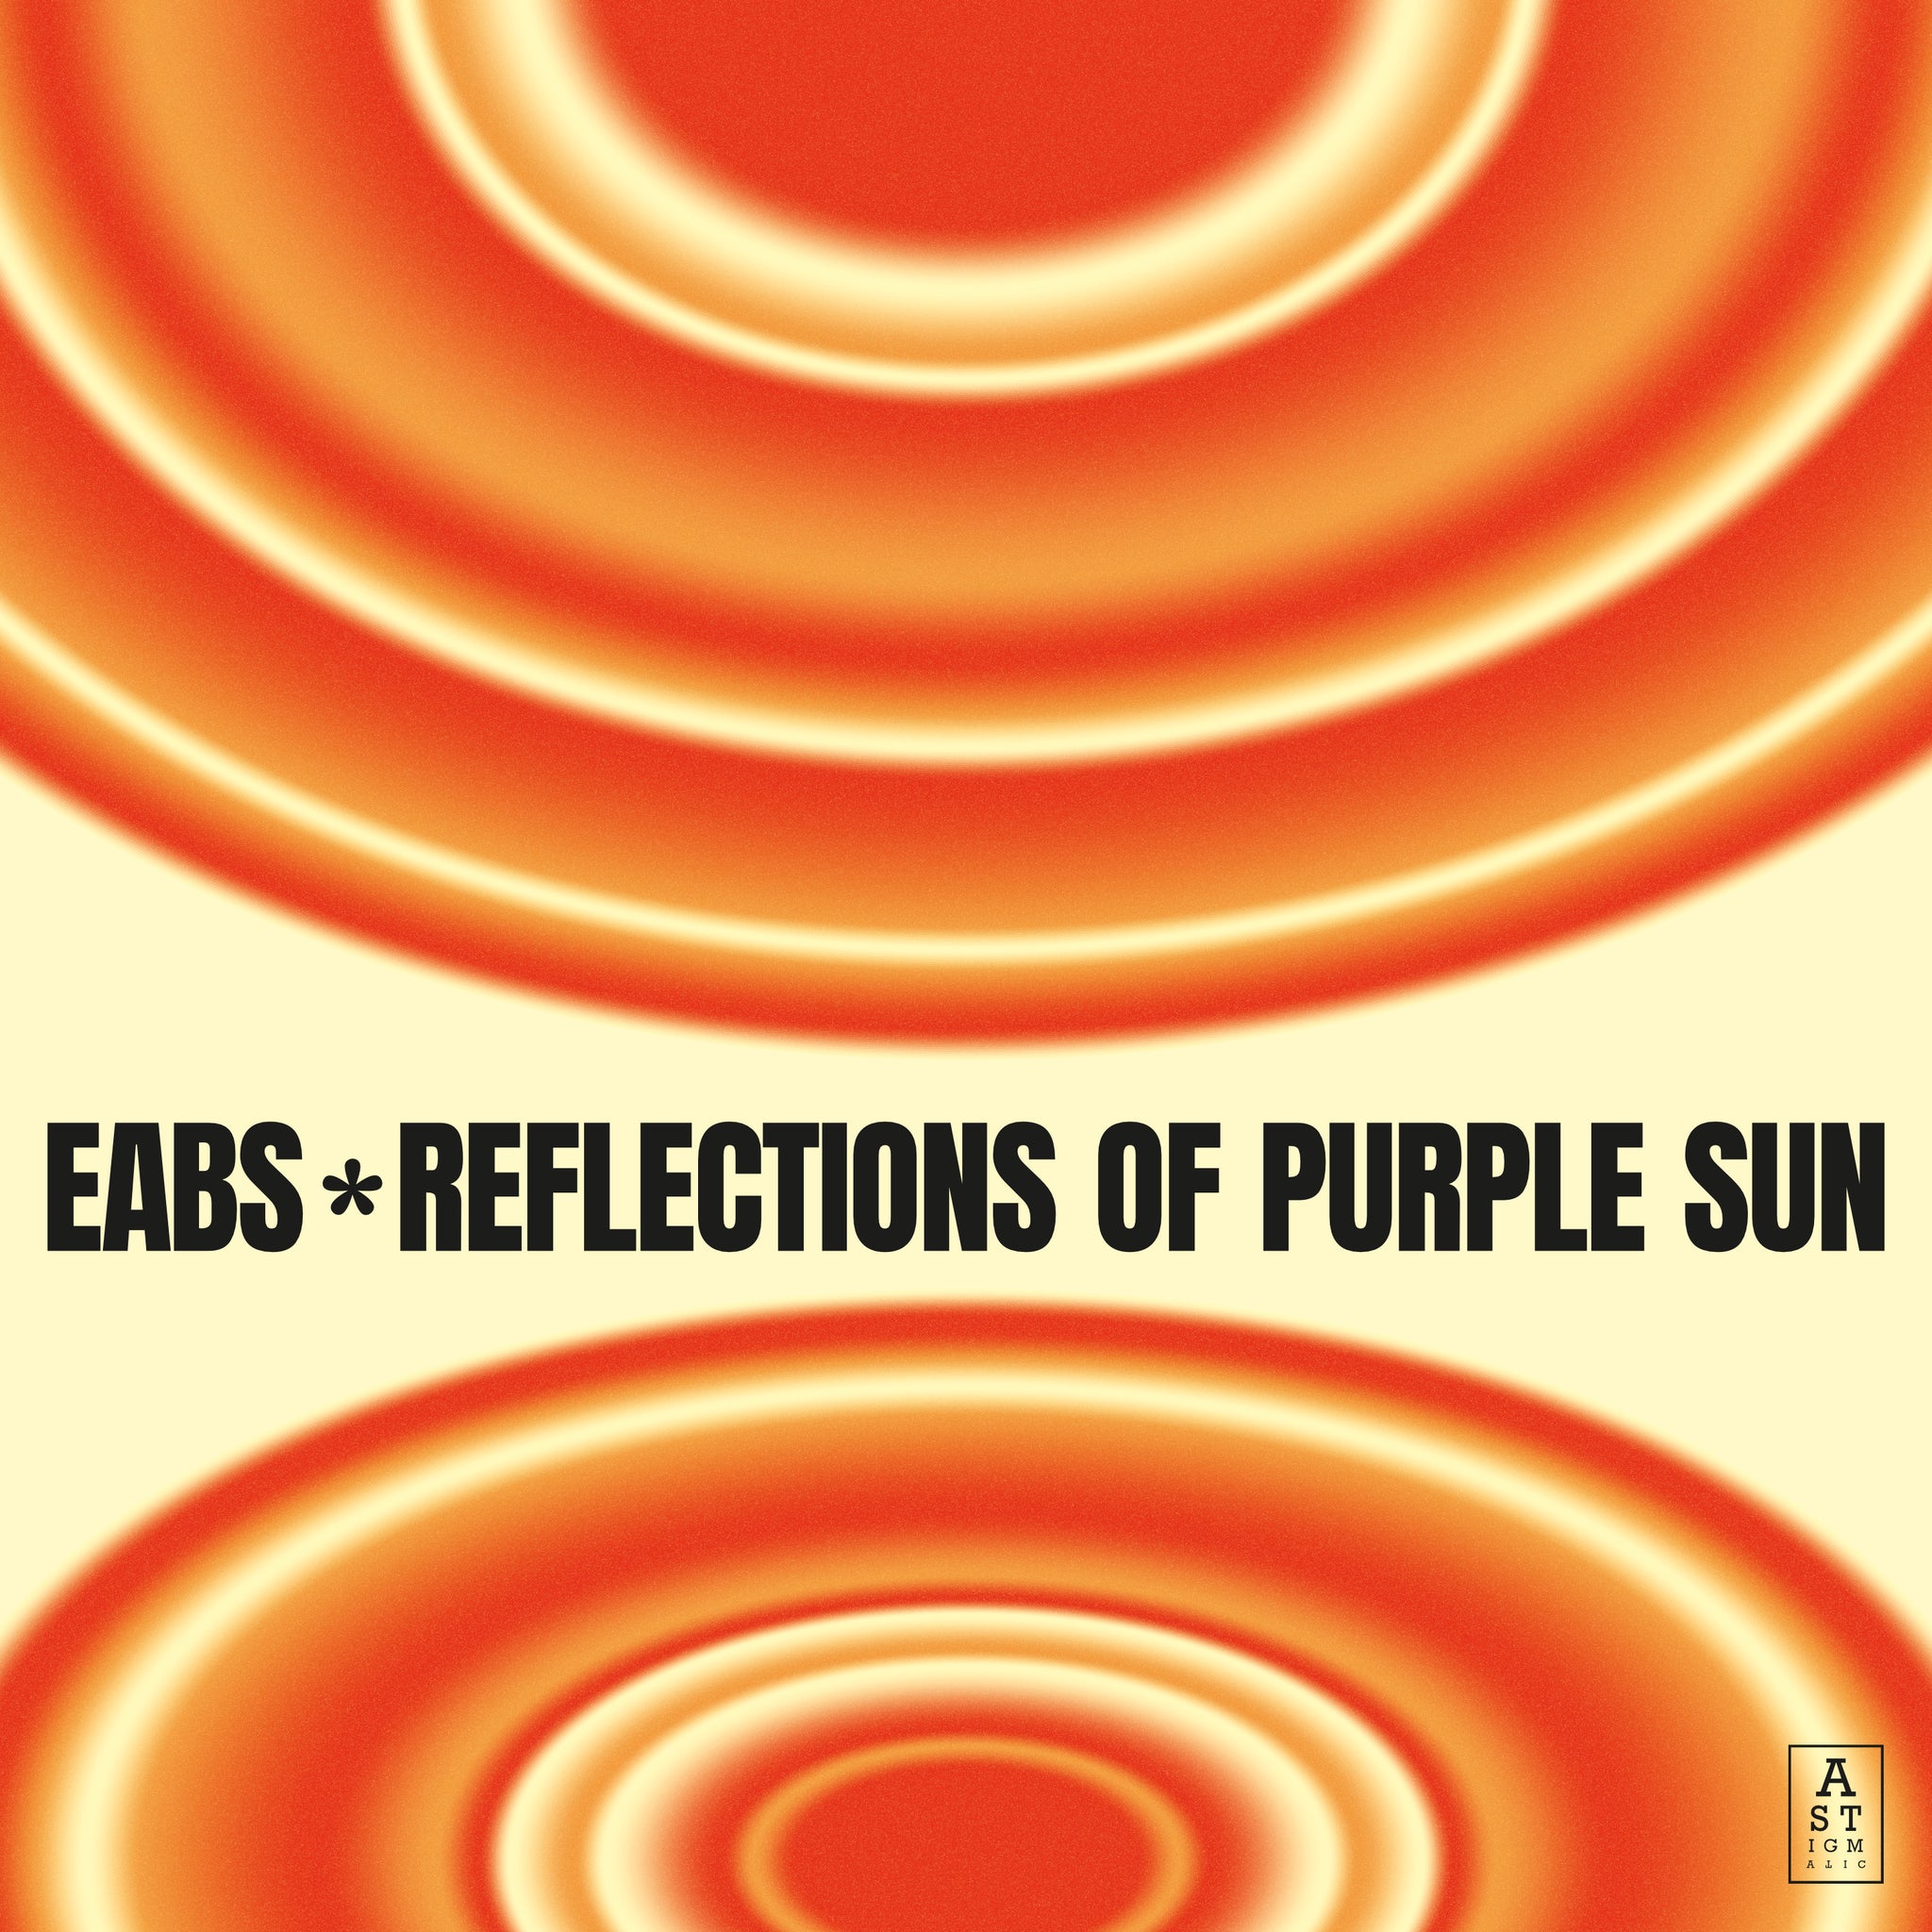 EABS Reflections of Purple Sun LP okładka płyty winylowej jazz